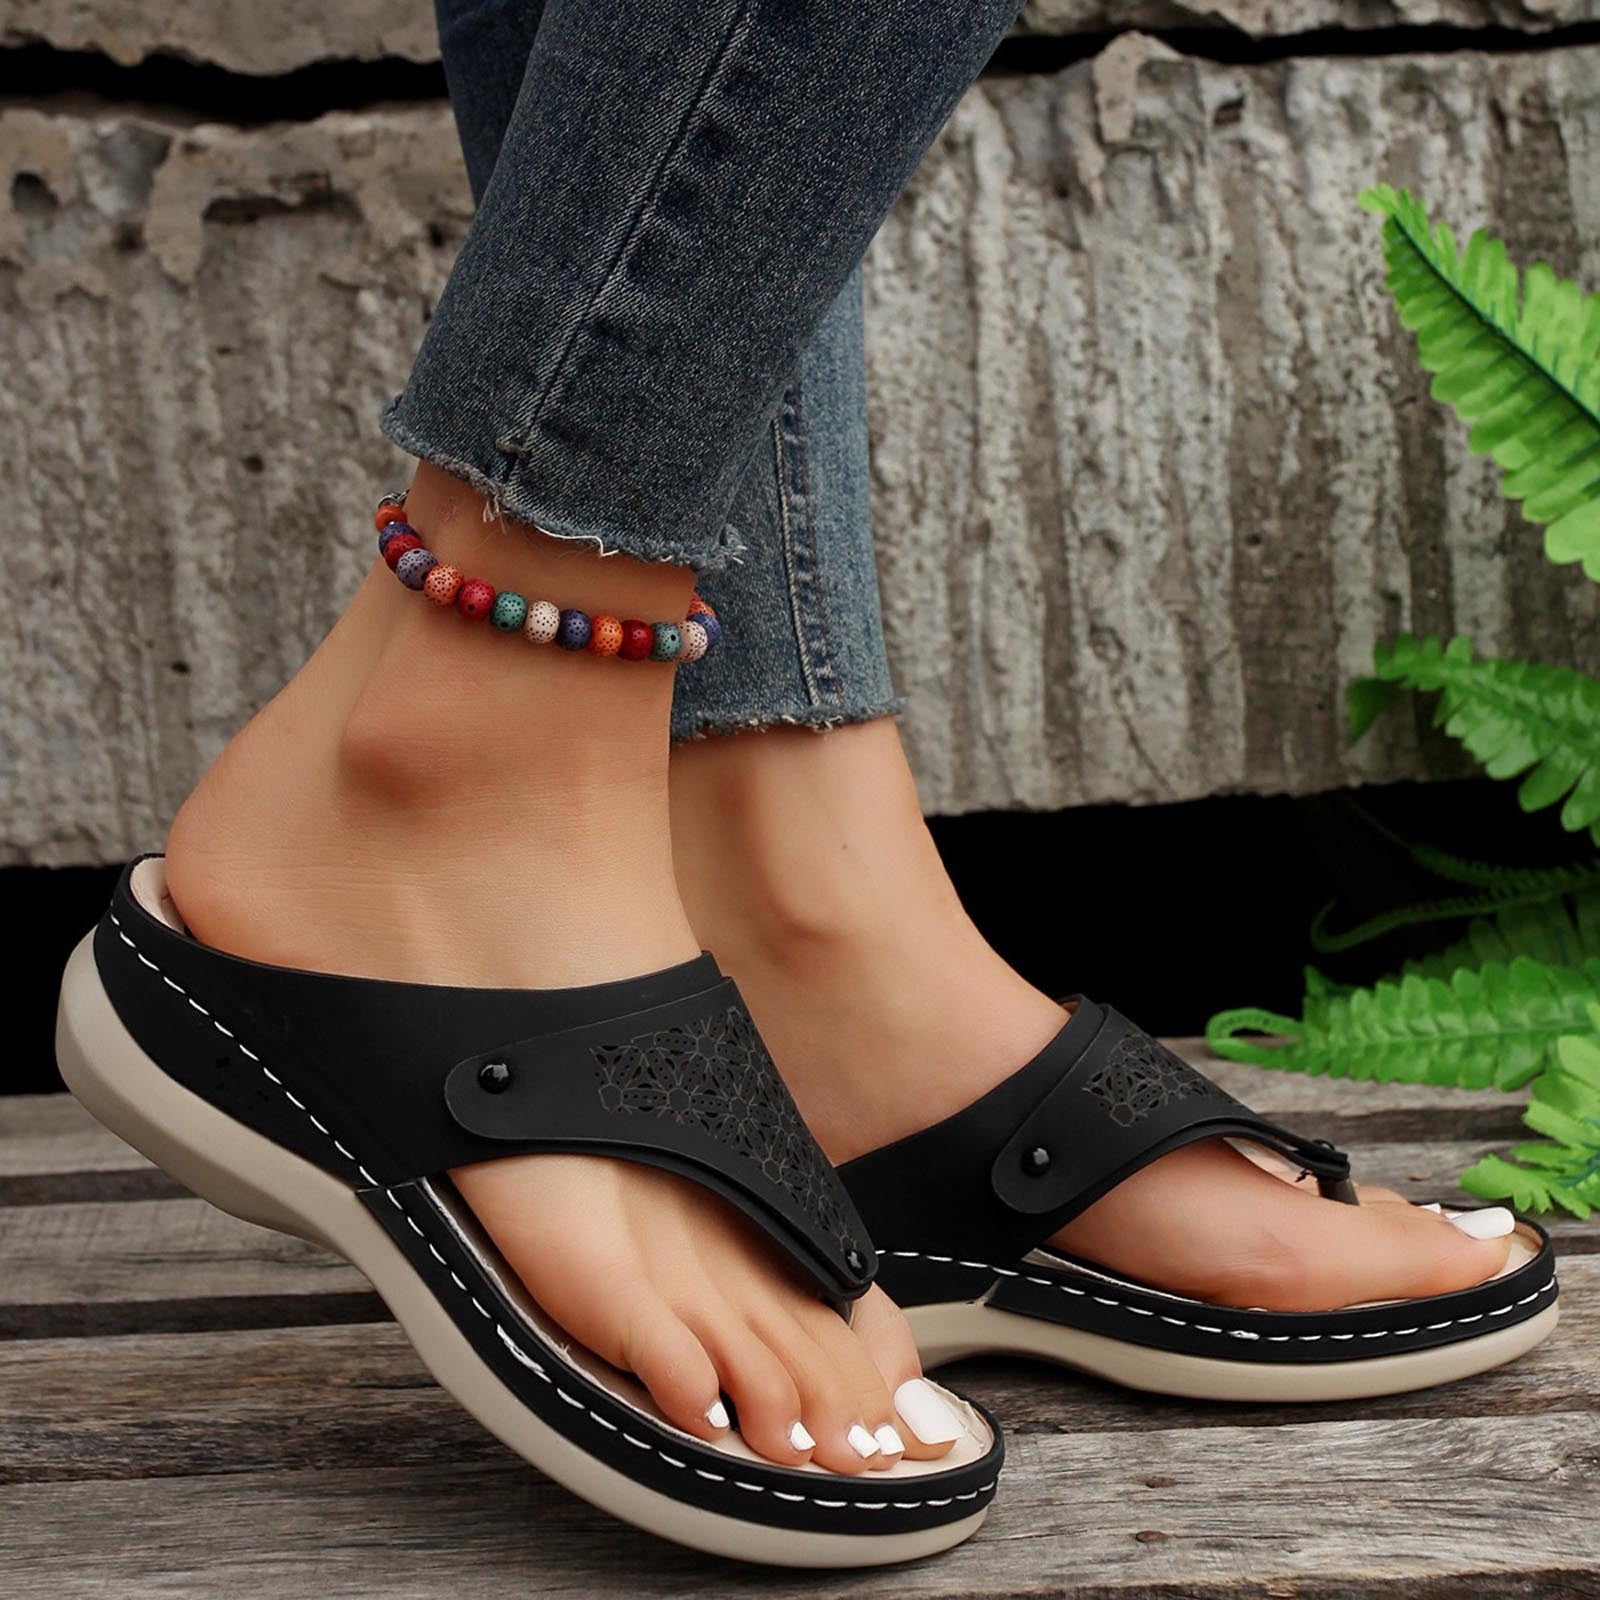 Kayannuo Beach Sandals Sandal Clearance for Women Flip Flop Woman